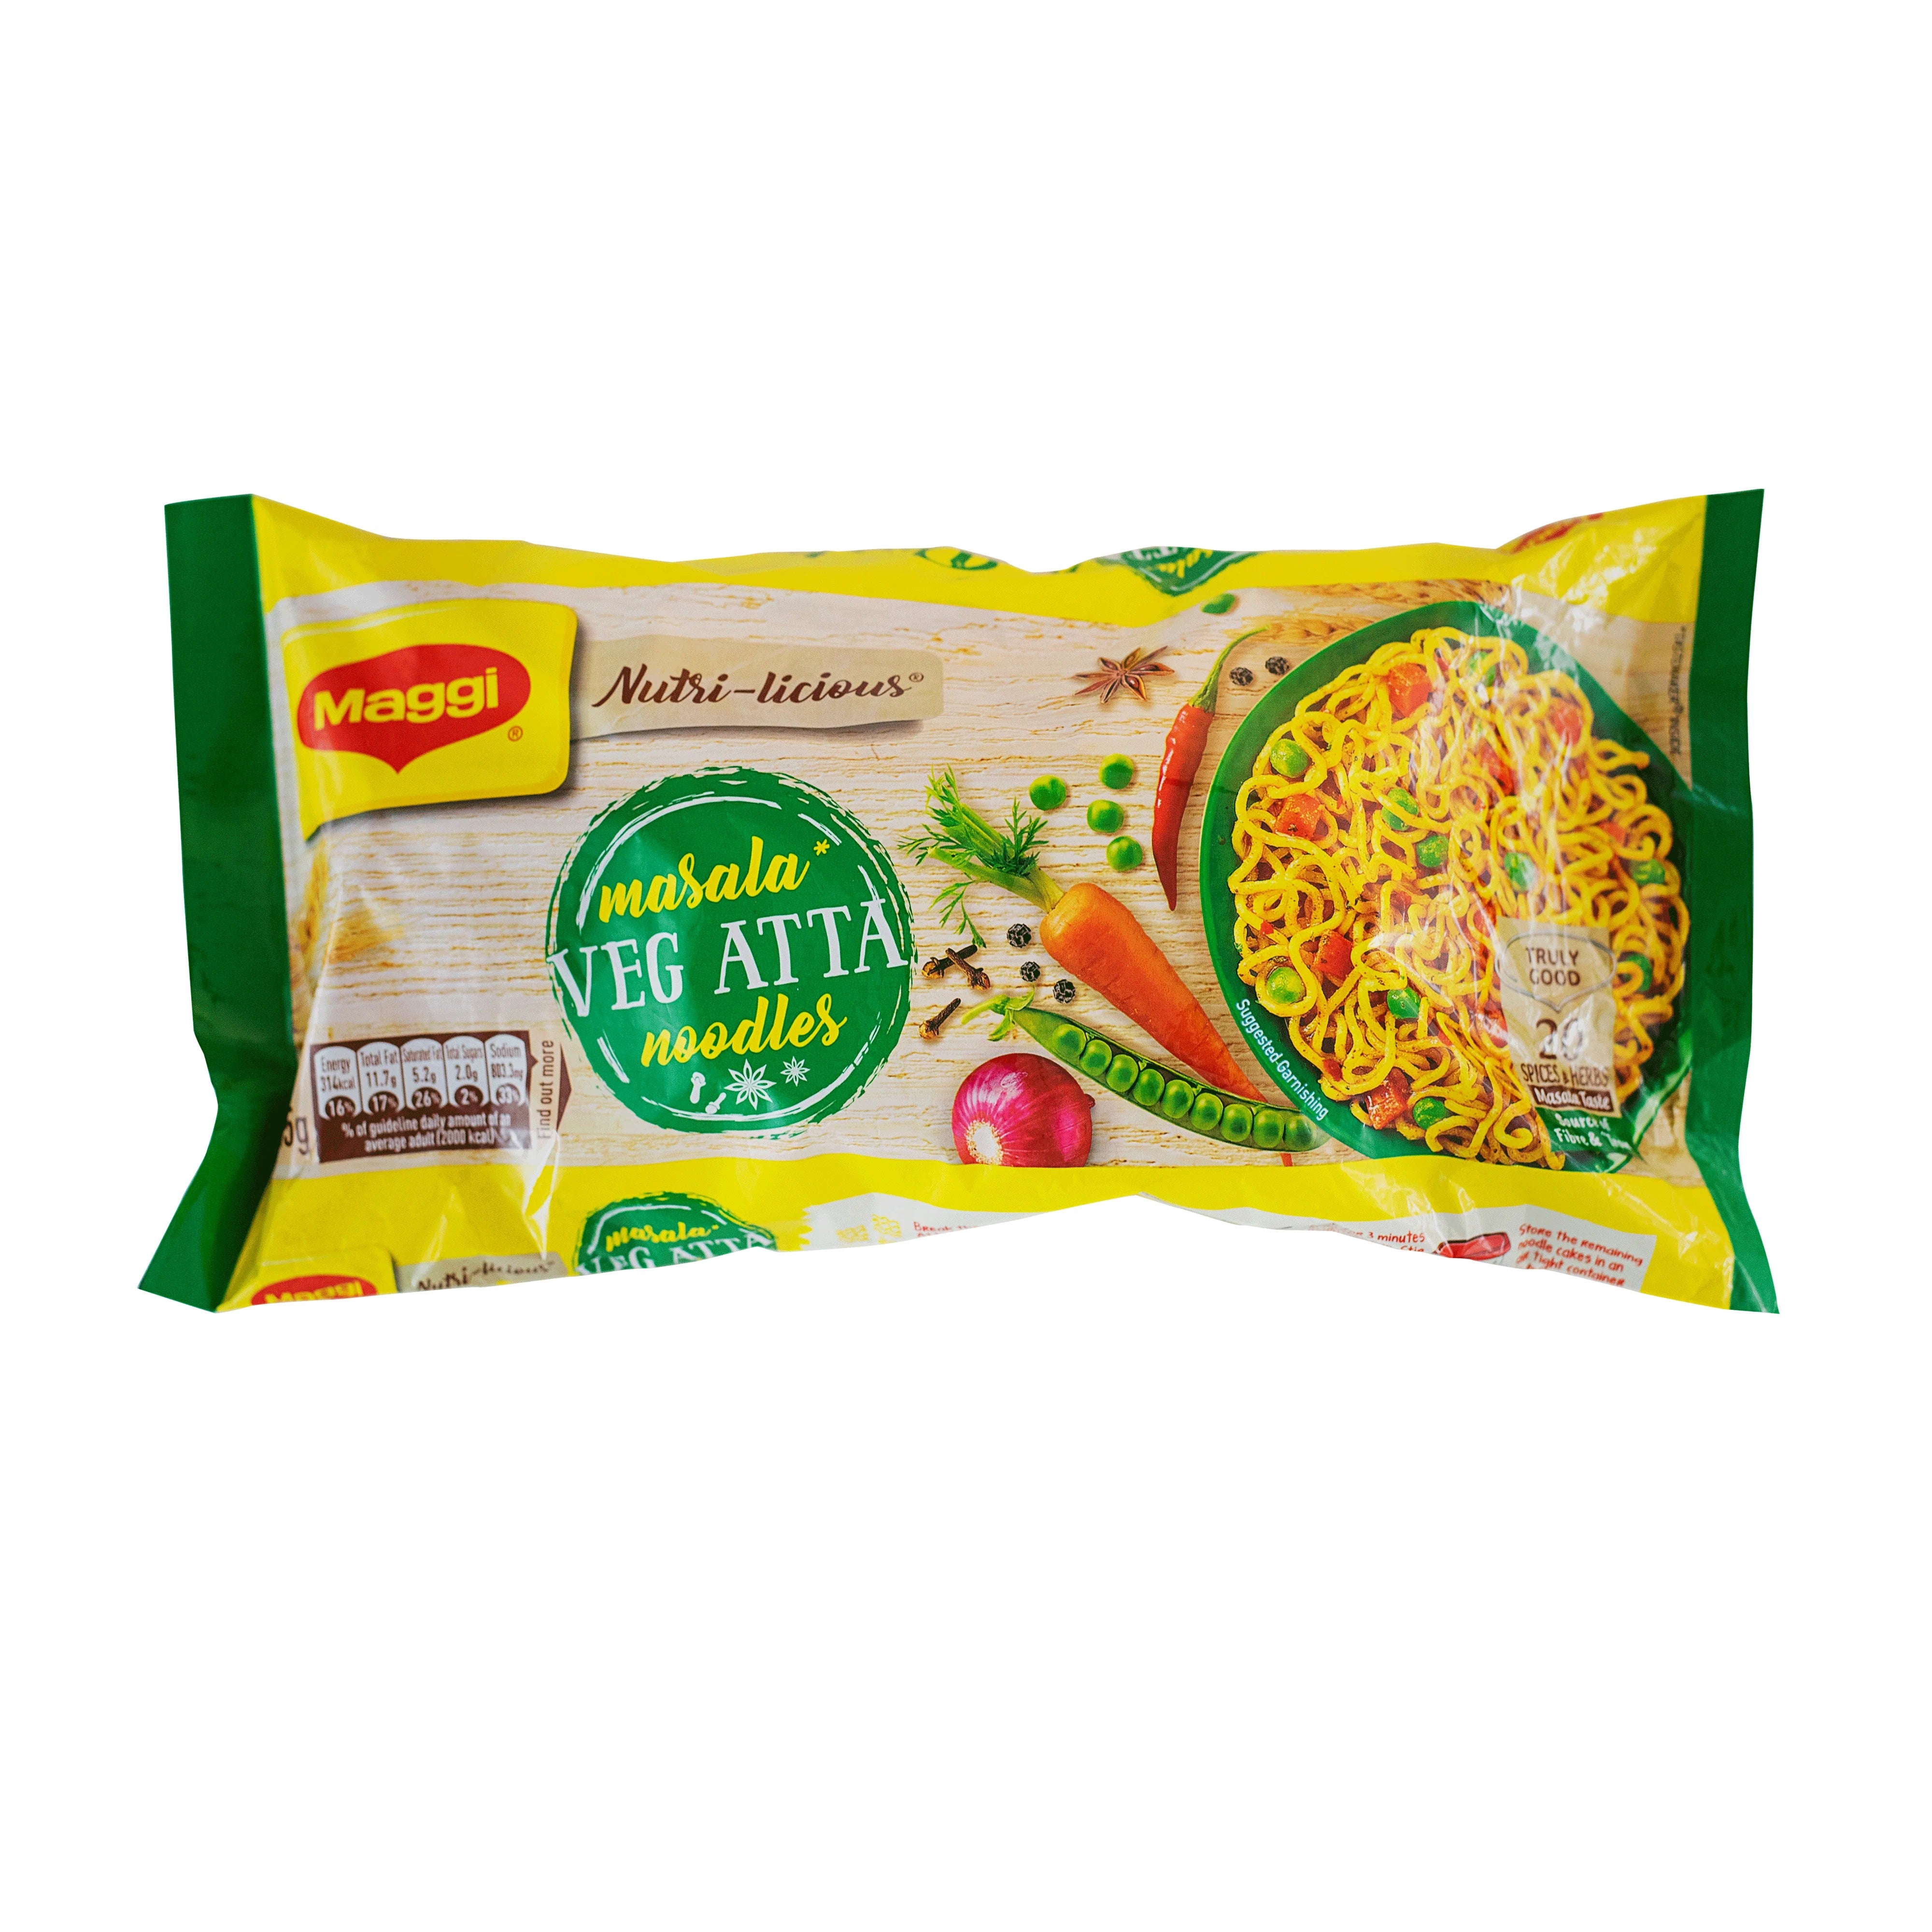 MAGGI Nutri-Licious Masala Veg Atta Noodles - Herbs & Spice Blend, Iron &  Fibre Rich, 72.5 g